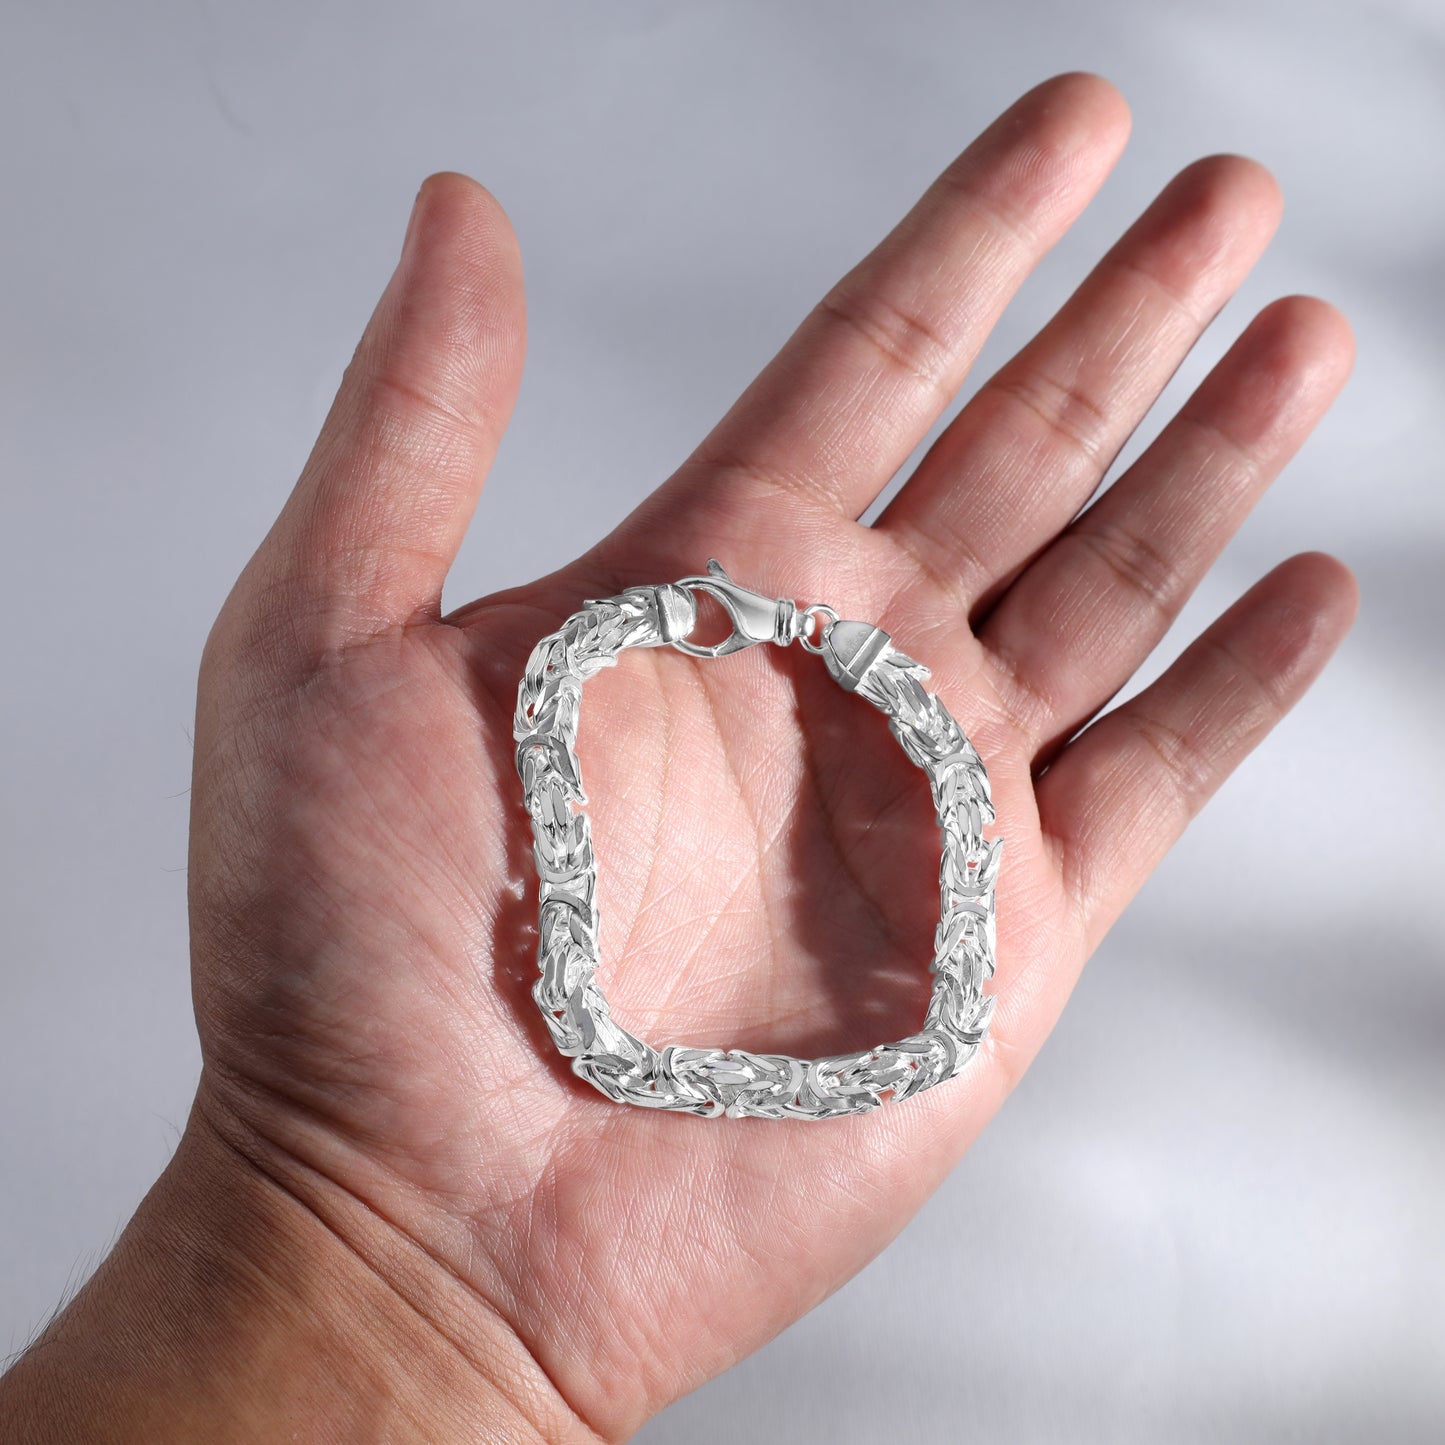 Königskette achtkant Armband Königsarmband 6,5mm breit 20cm lang aus 925 Sterling Silber (B520)